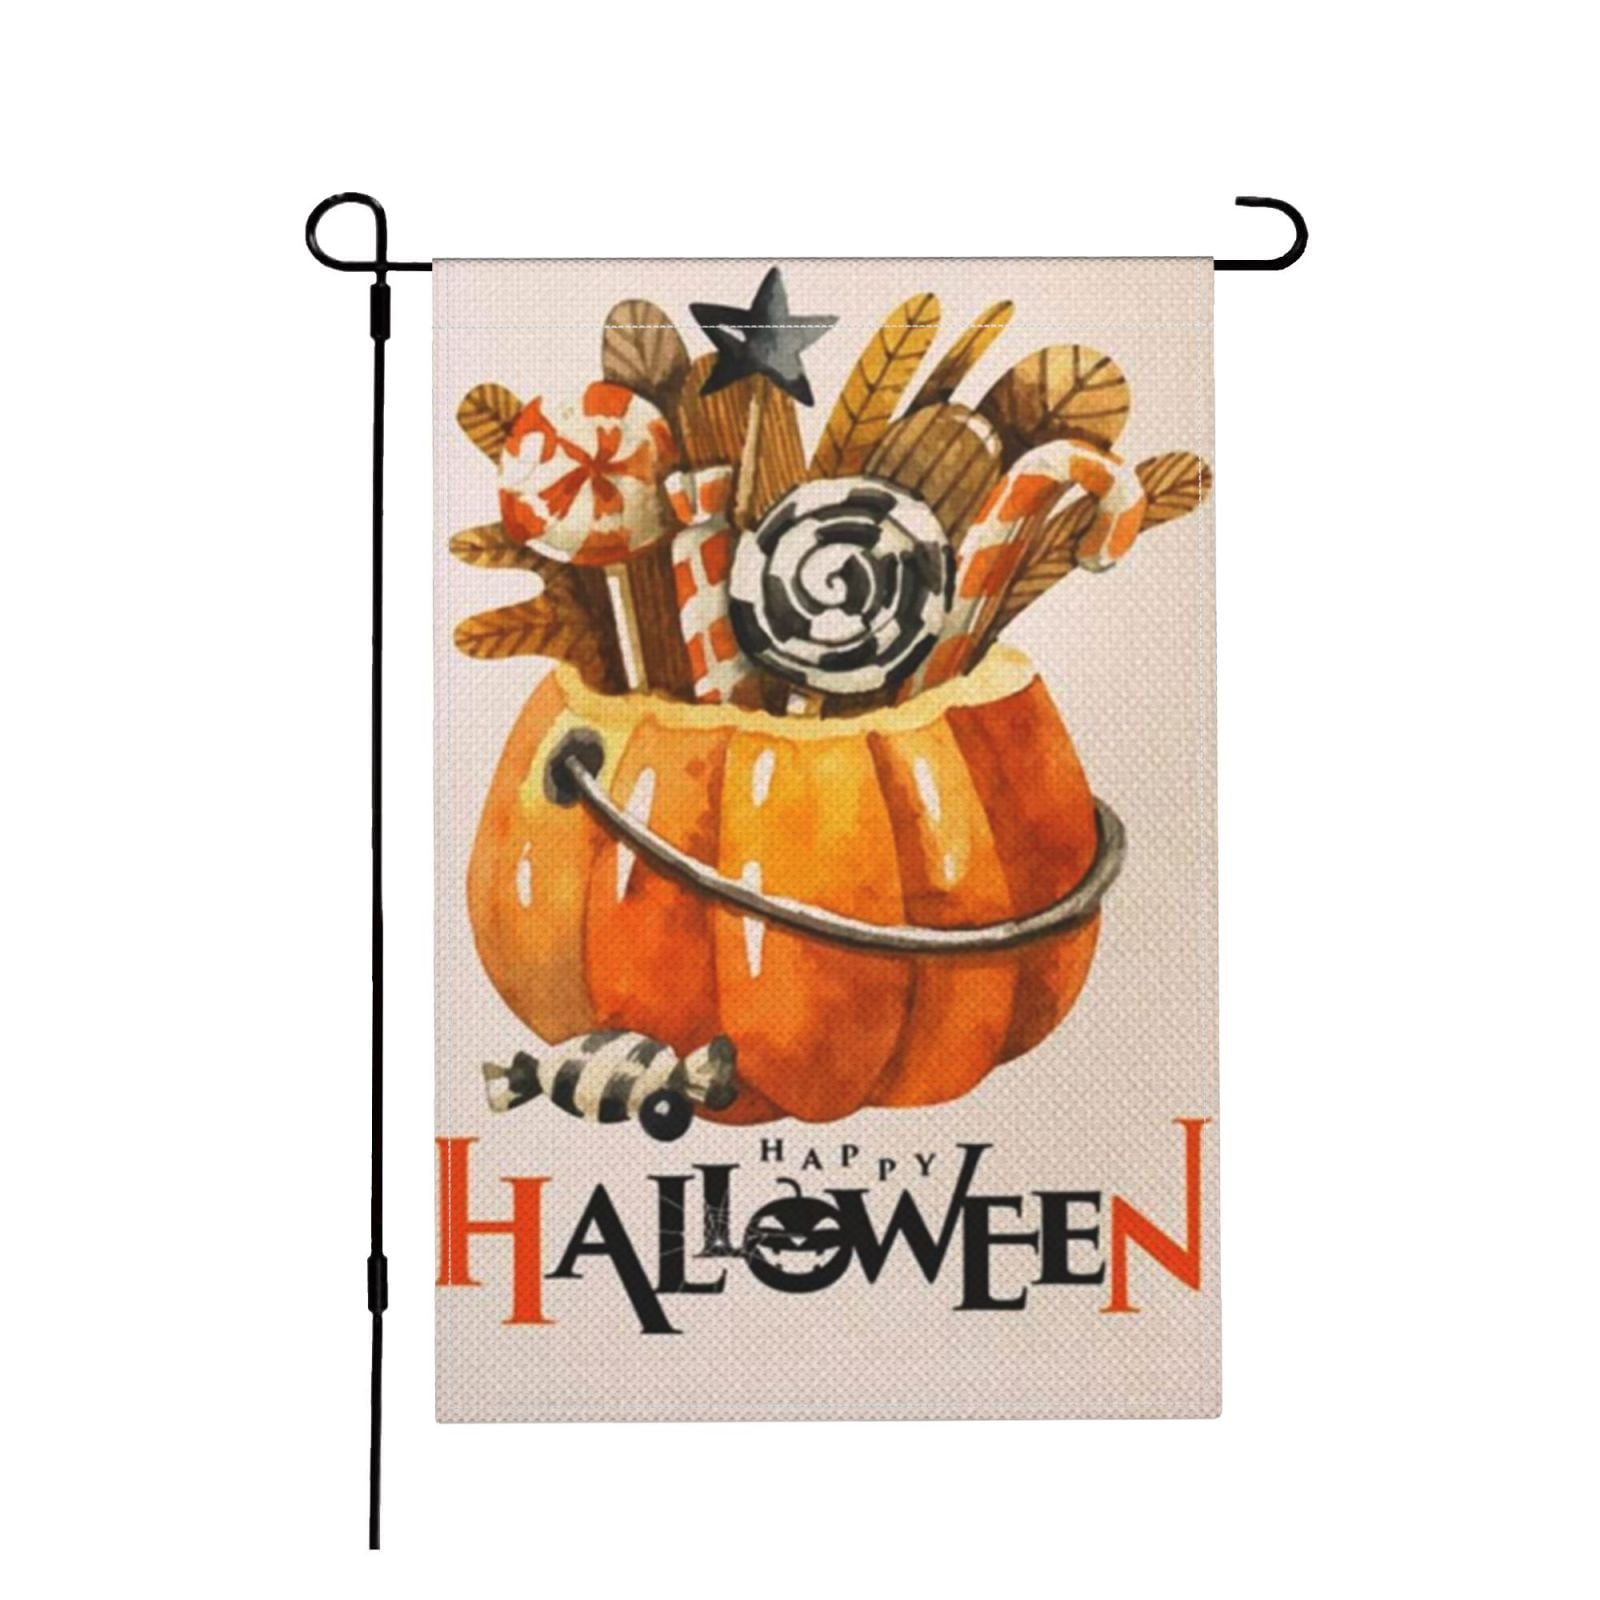 Happy Halloween Pumpkins Garden Flag Outdoor Decor Yard Banner Tool 12x18inch 